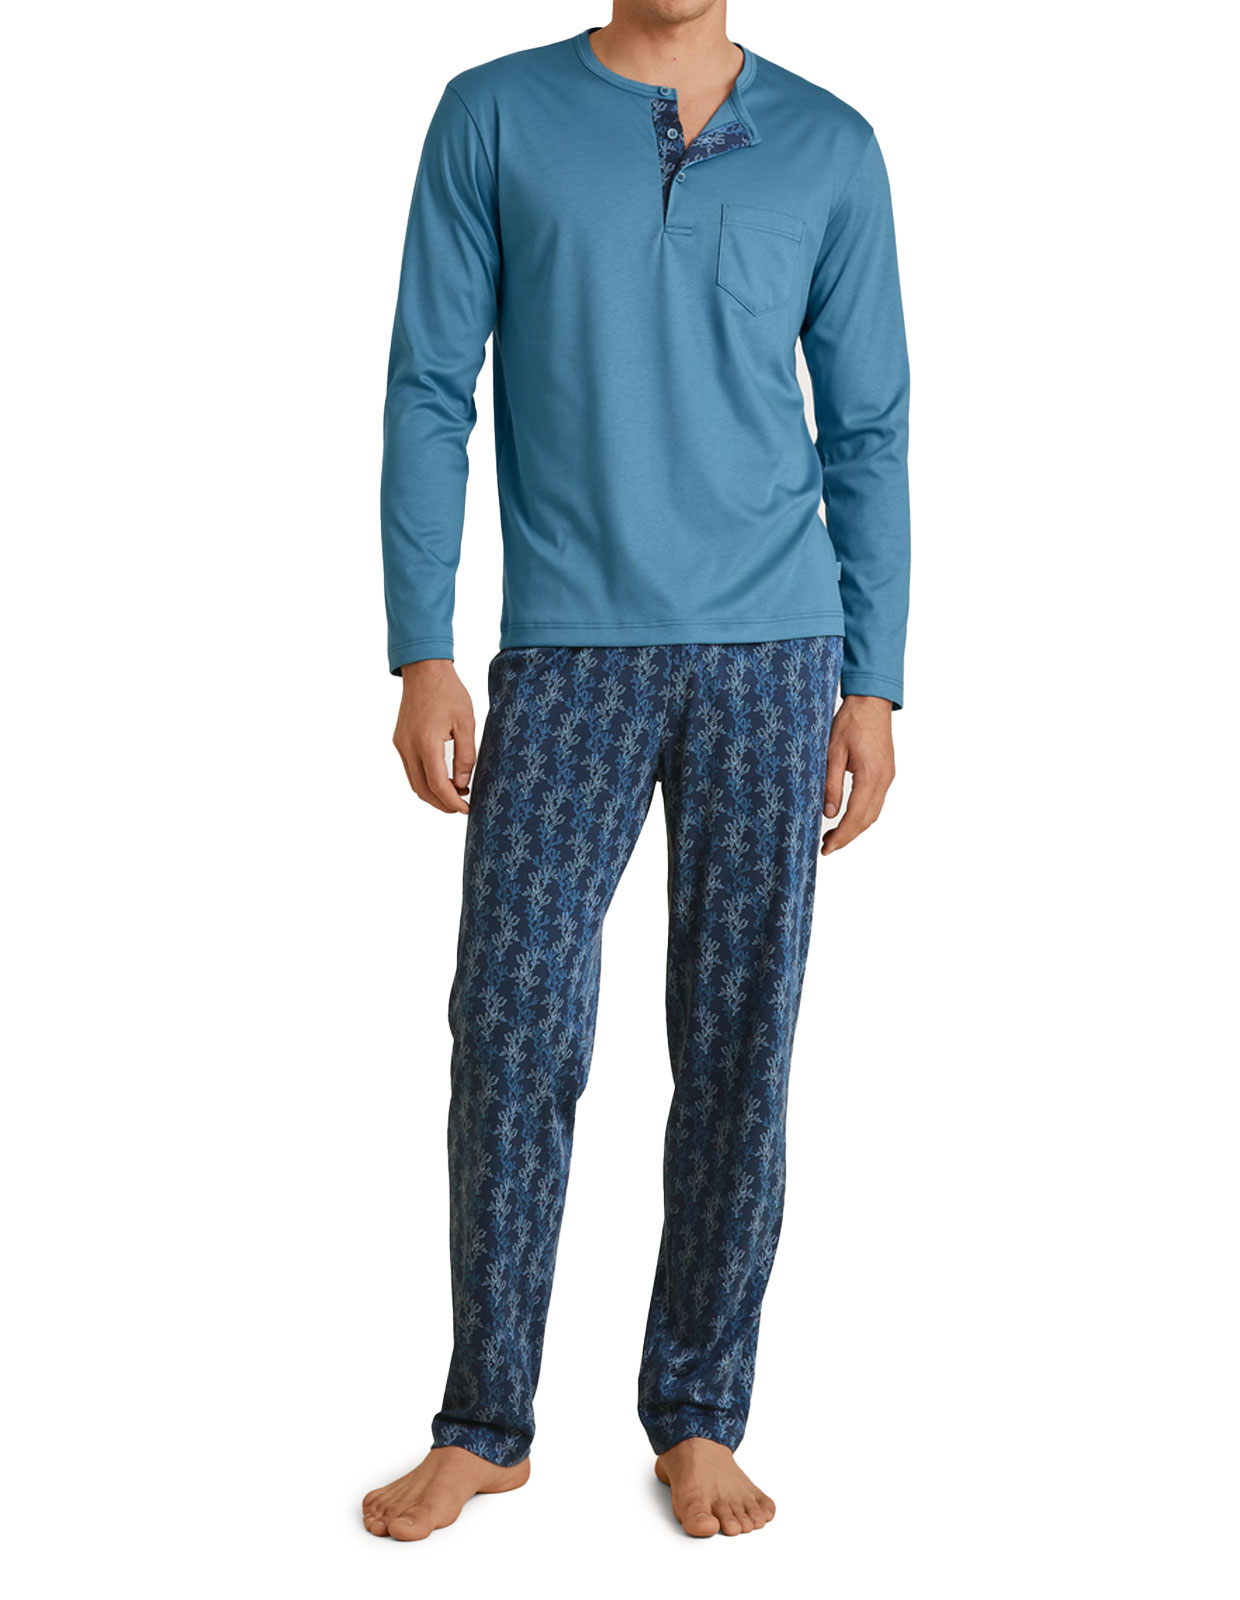 Pyjamas Blå Stl XL